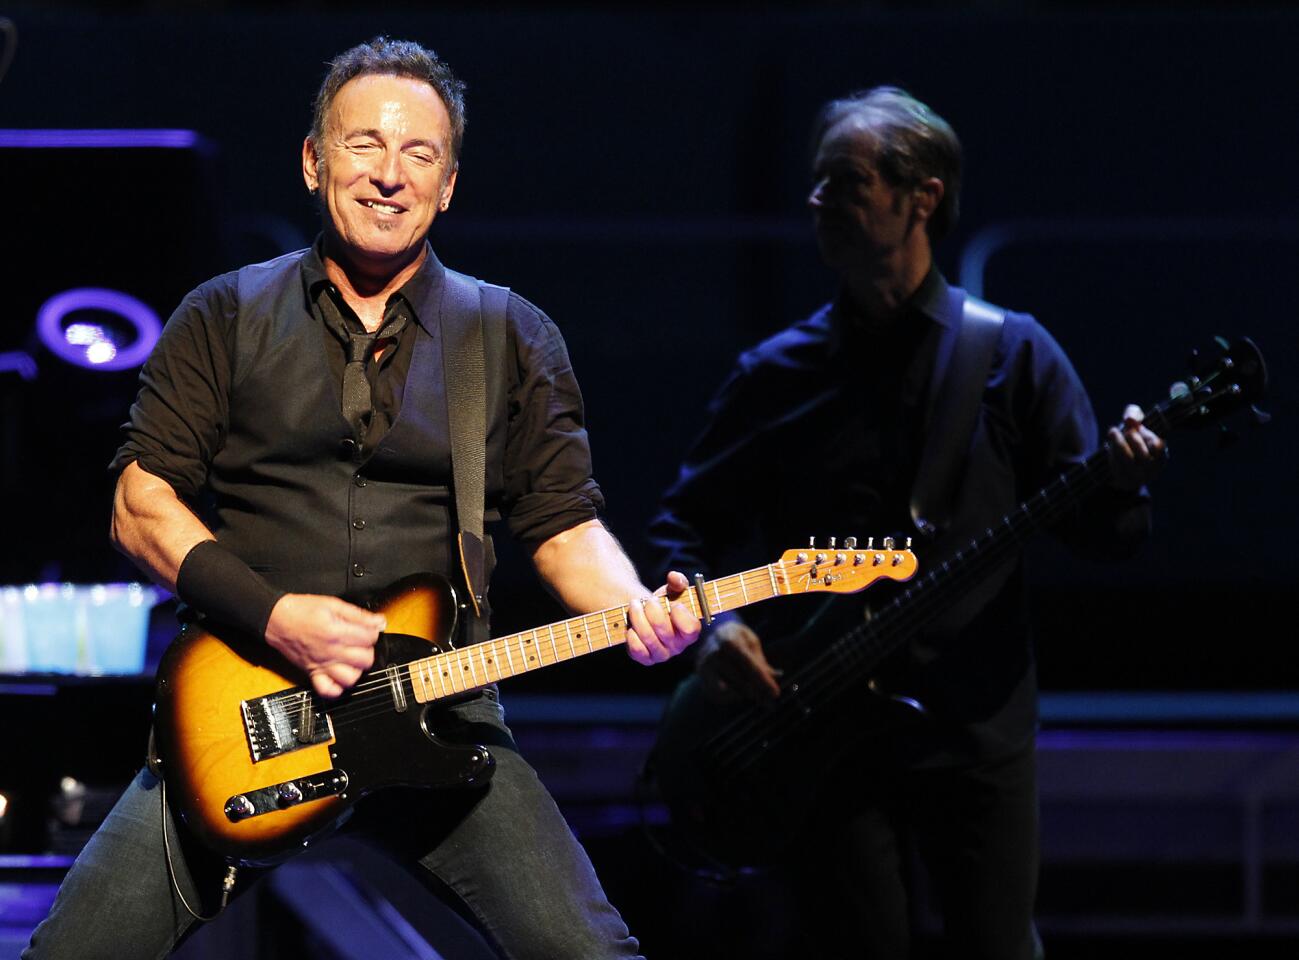 3. Bruce Springsteen & the E Street Band, $115.1 million